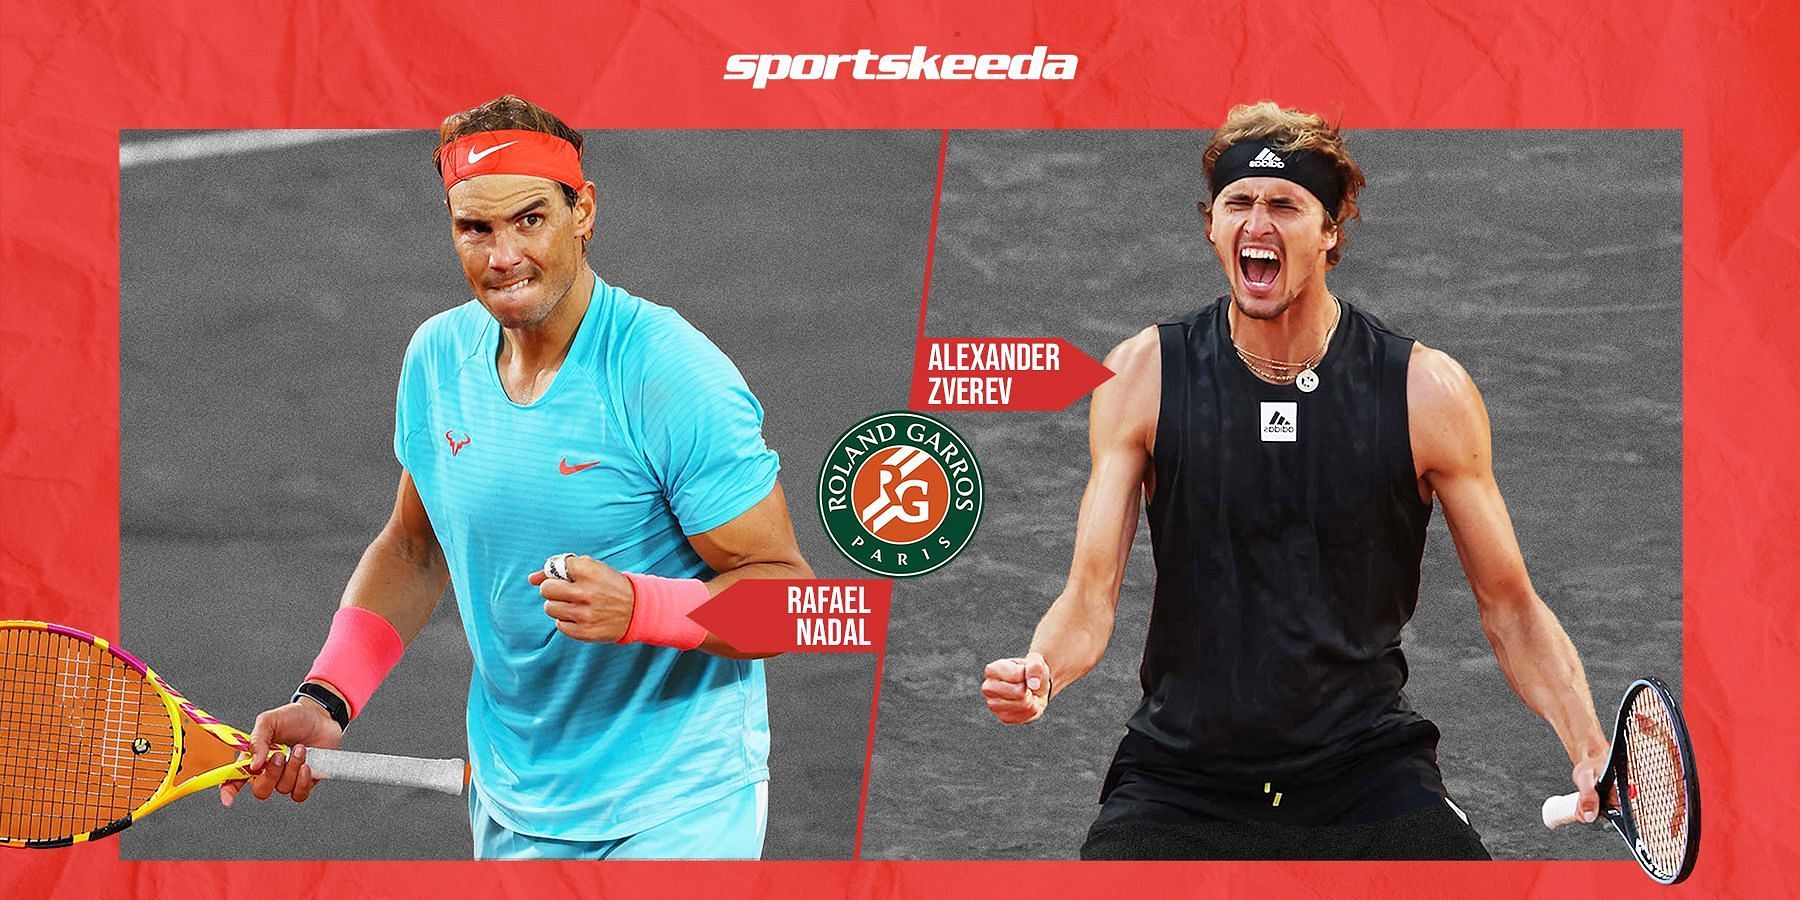 French Open 2022 Rafael Nadal vs Alexander Zverev preview, head-to-head, prediction, odds and pick